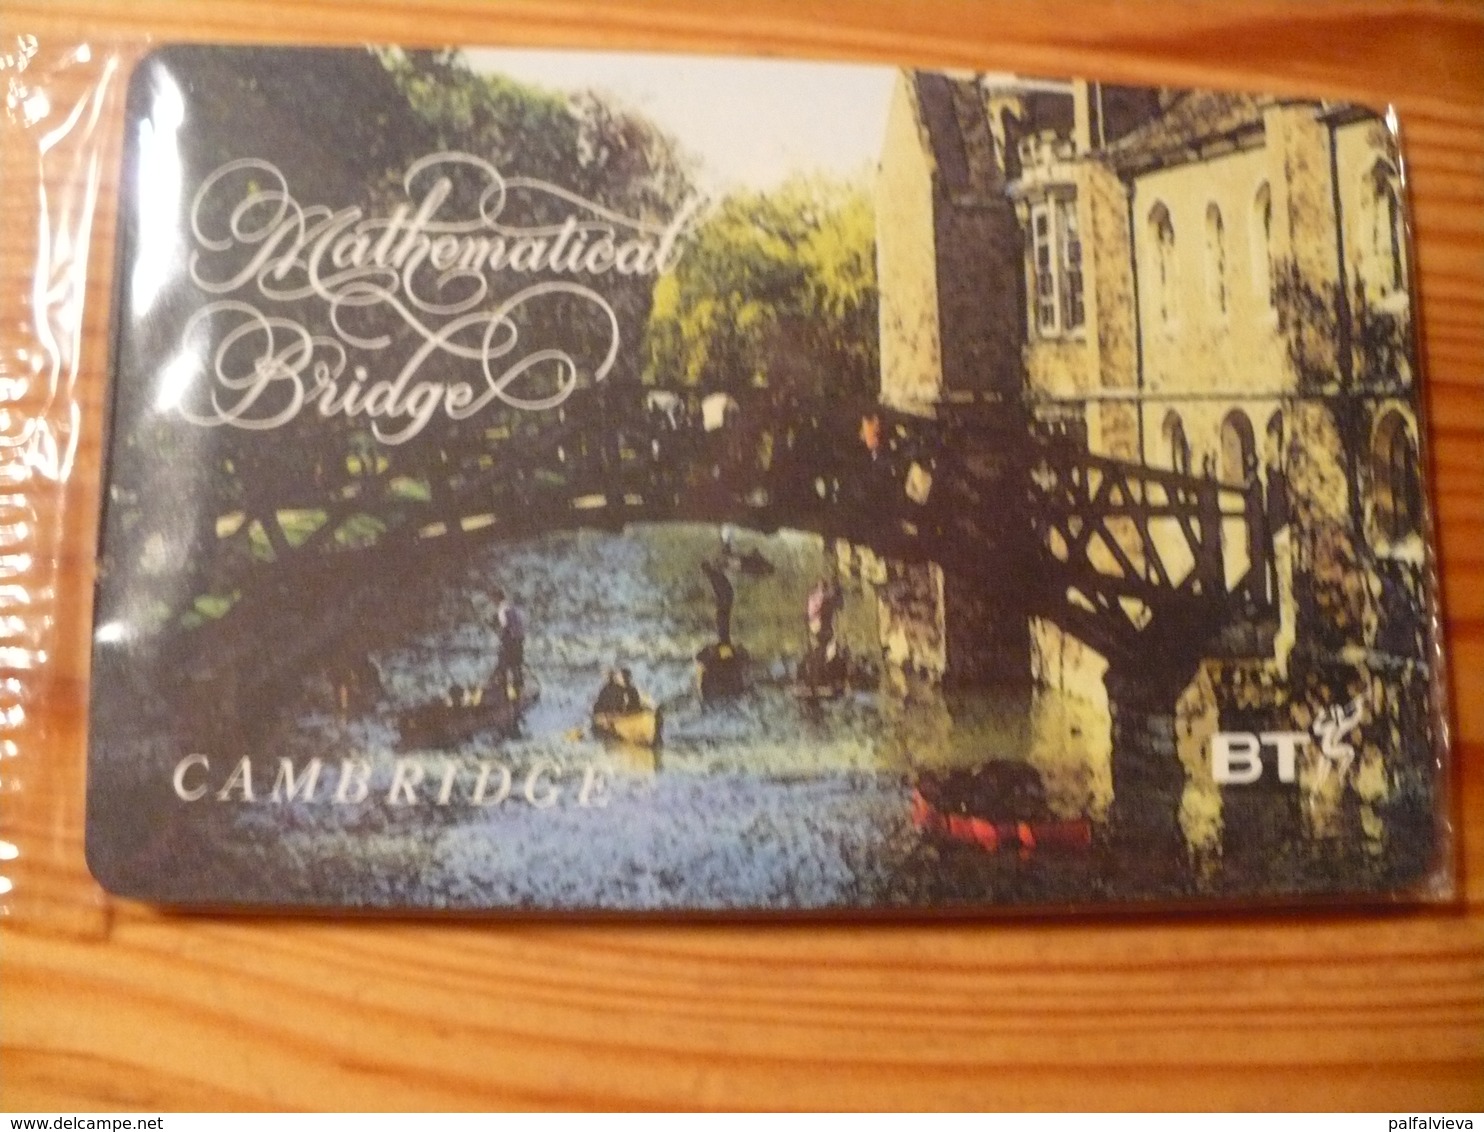 Phonecard United Kingdom, BT - Cambridge, Matchematical Bridge - BT Generale